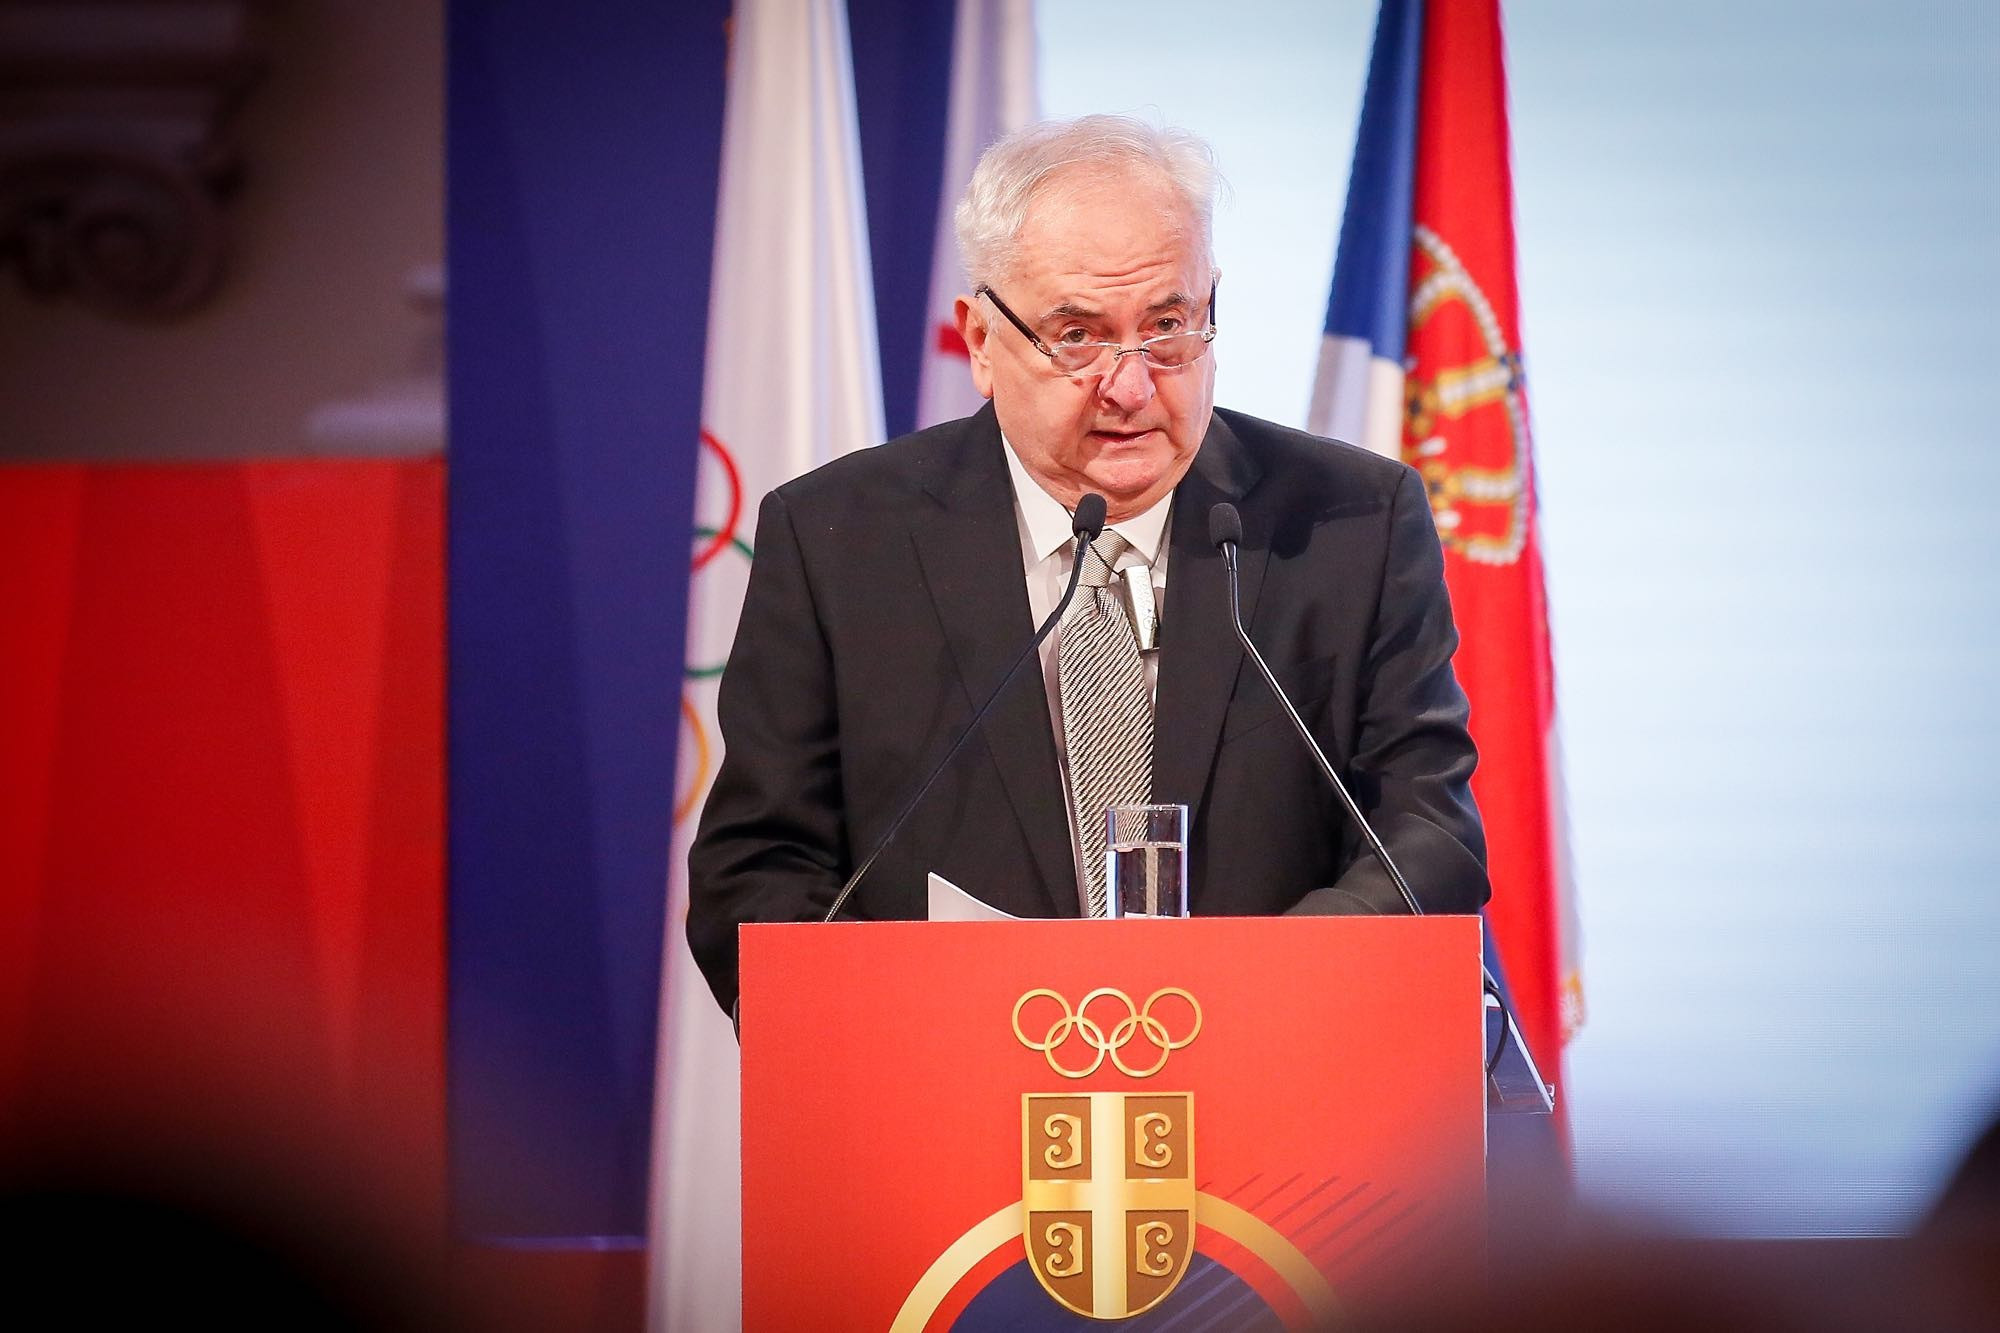 OCS President Božidar Maljković hailed the success of athletes who overcame 